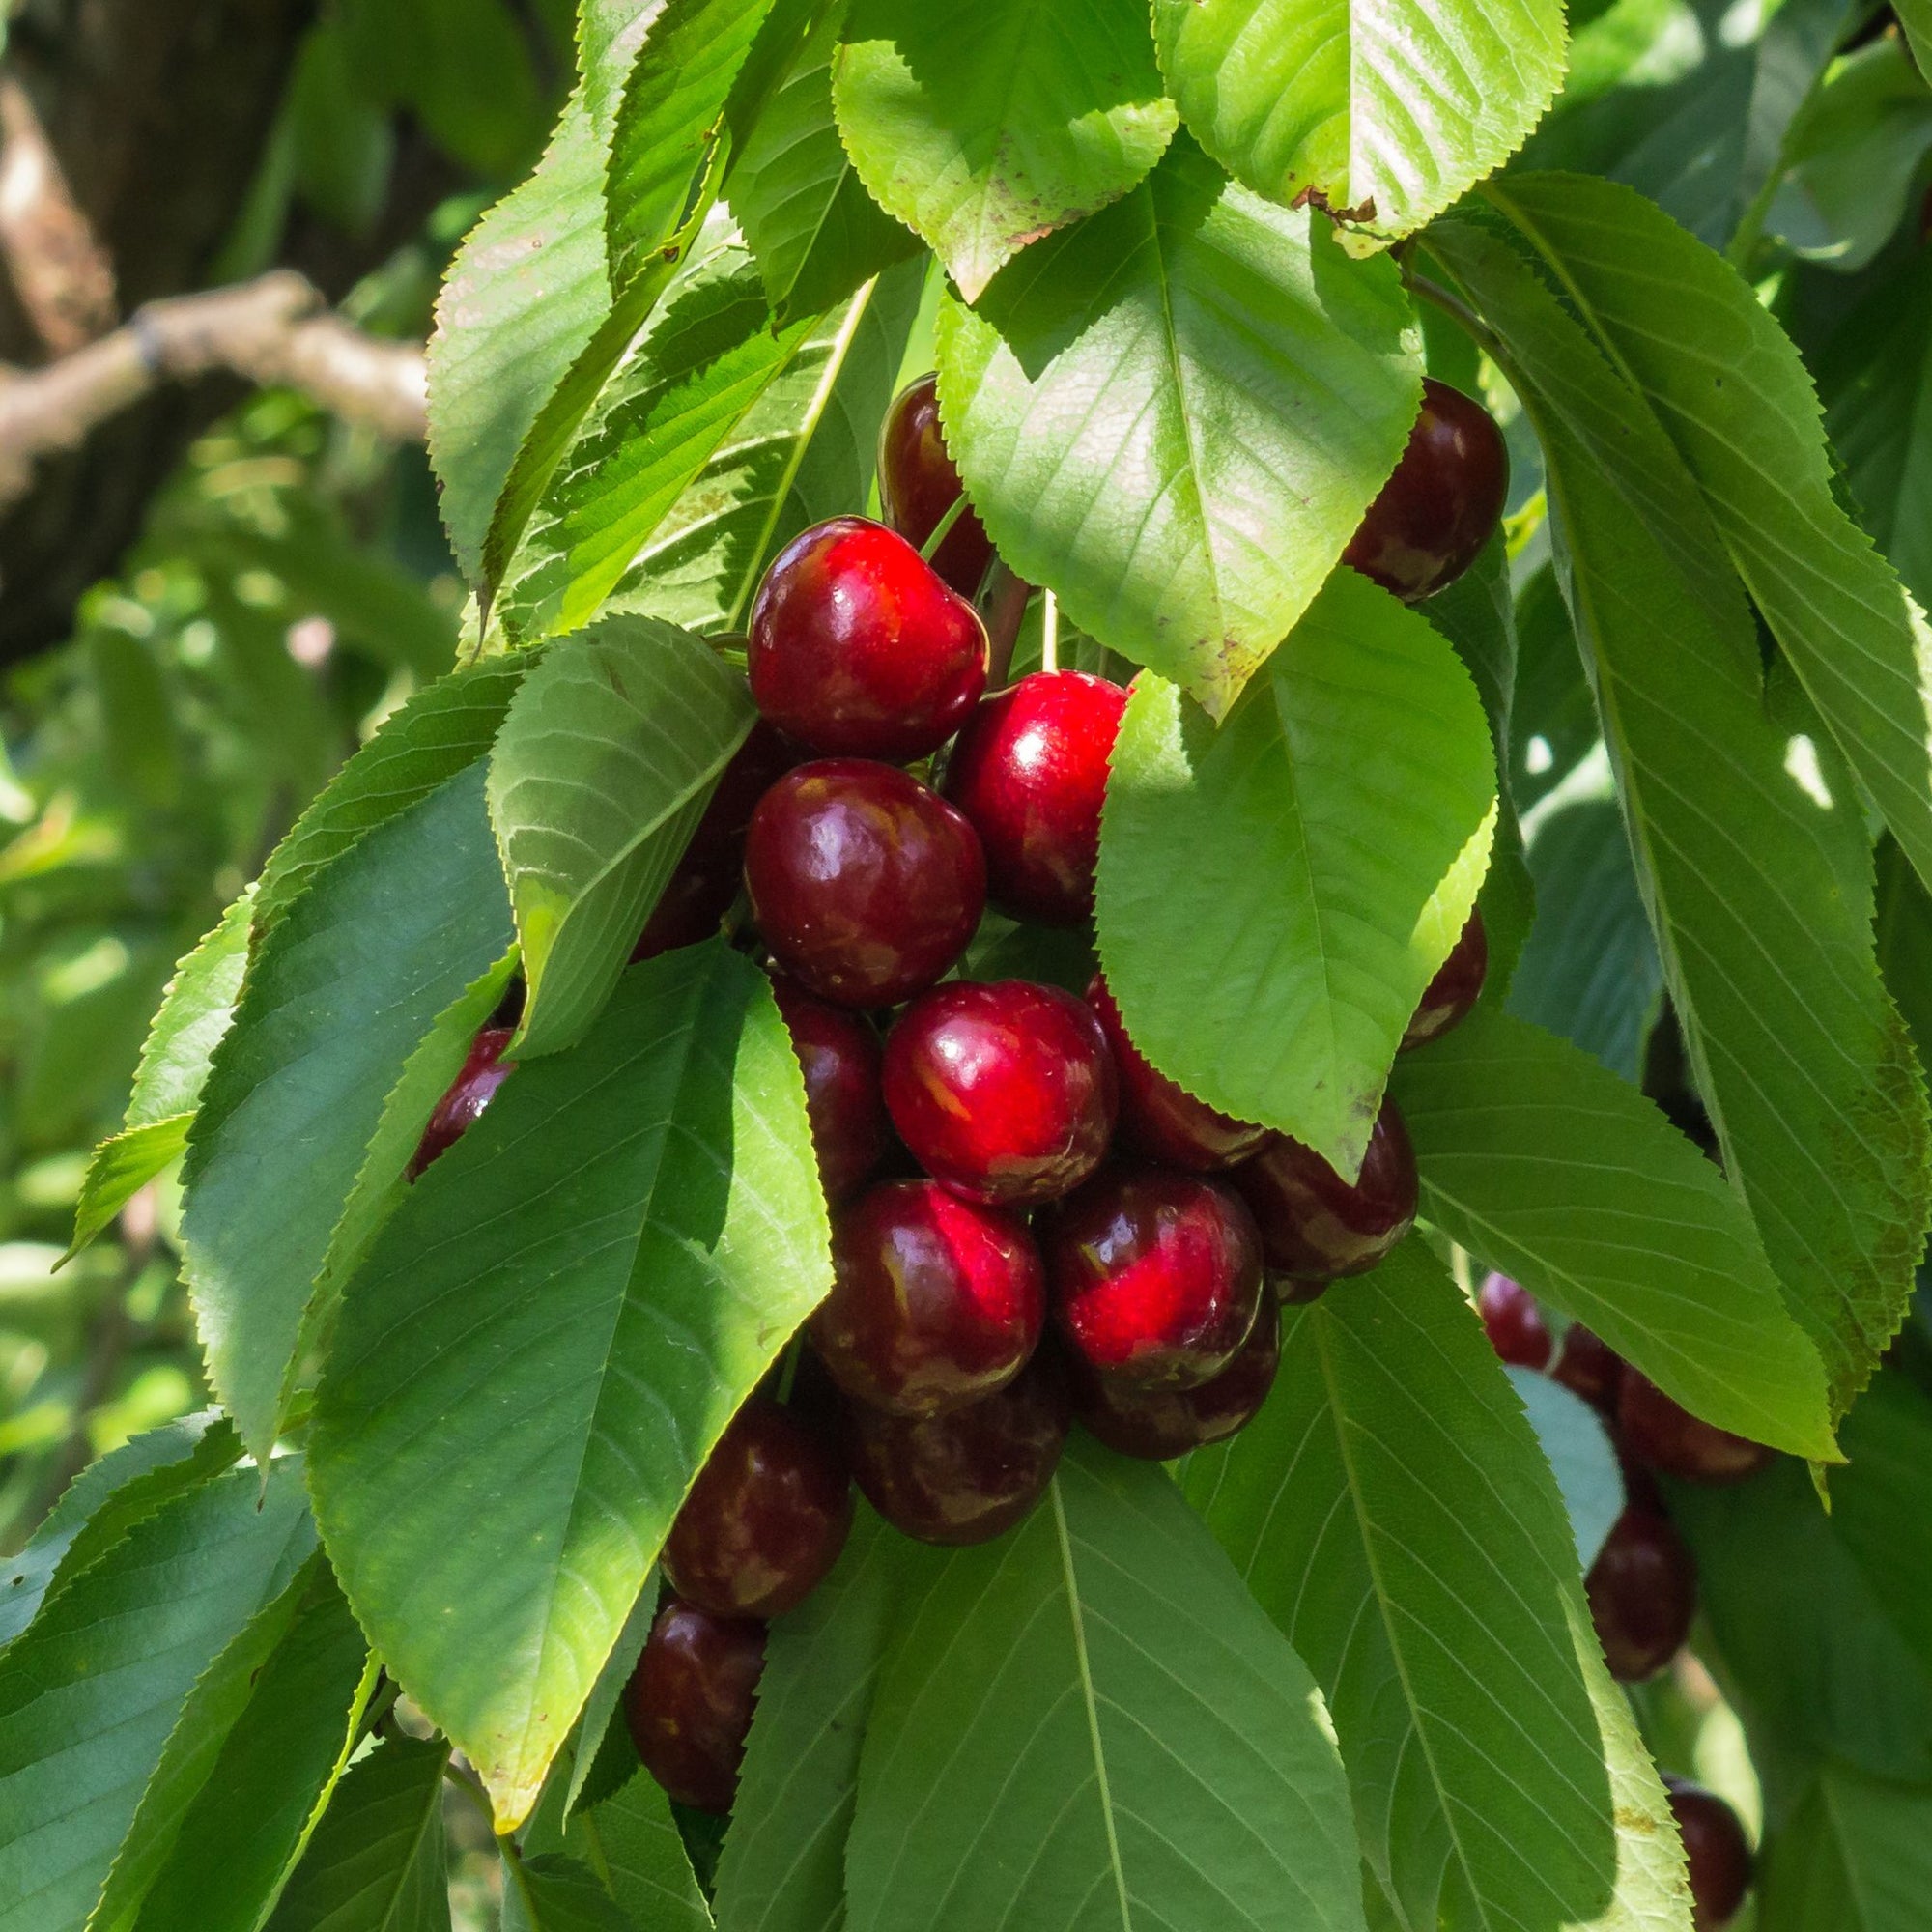 Dwarf/Patio Cherry Tree 'Sunburst' (Prunus avium) 1m